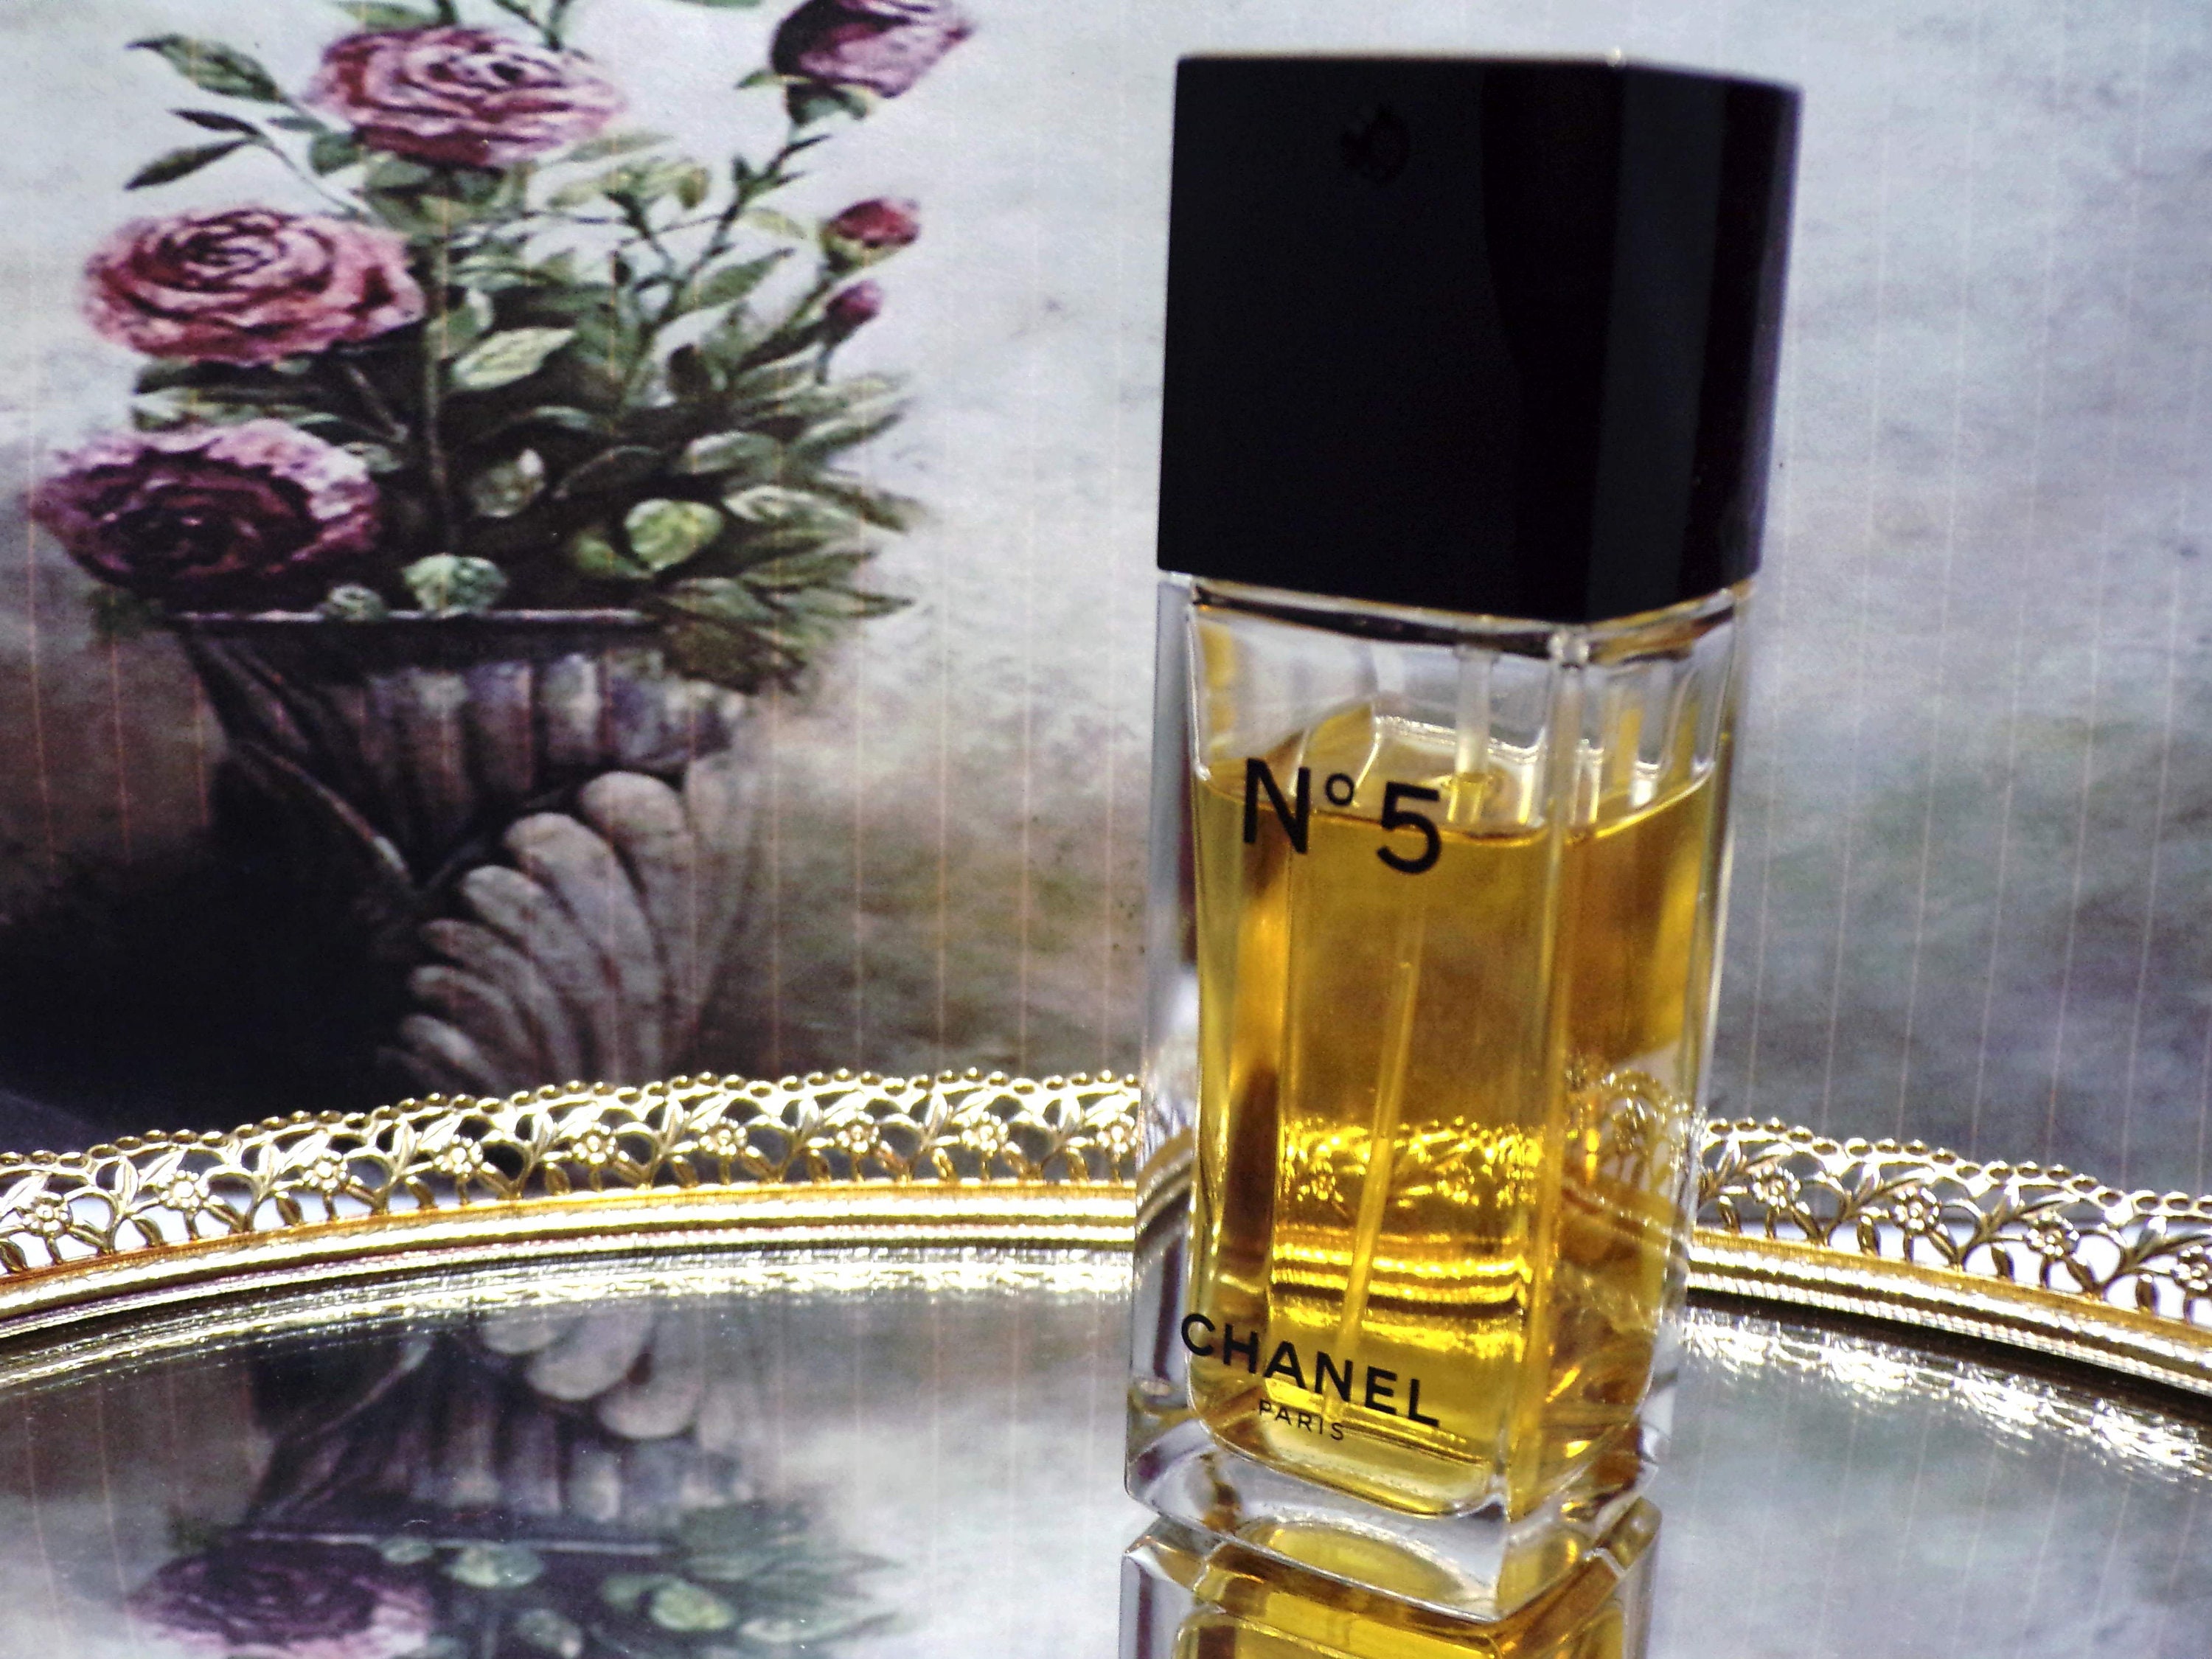 CHANEL Perfume - Chanel No 5 Perfume - Eau de Toilette Spray - 1.2